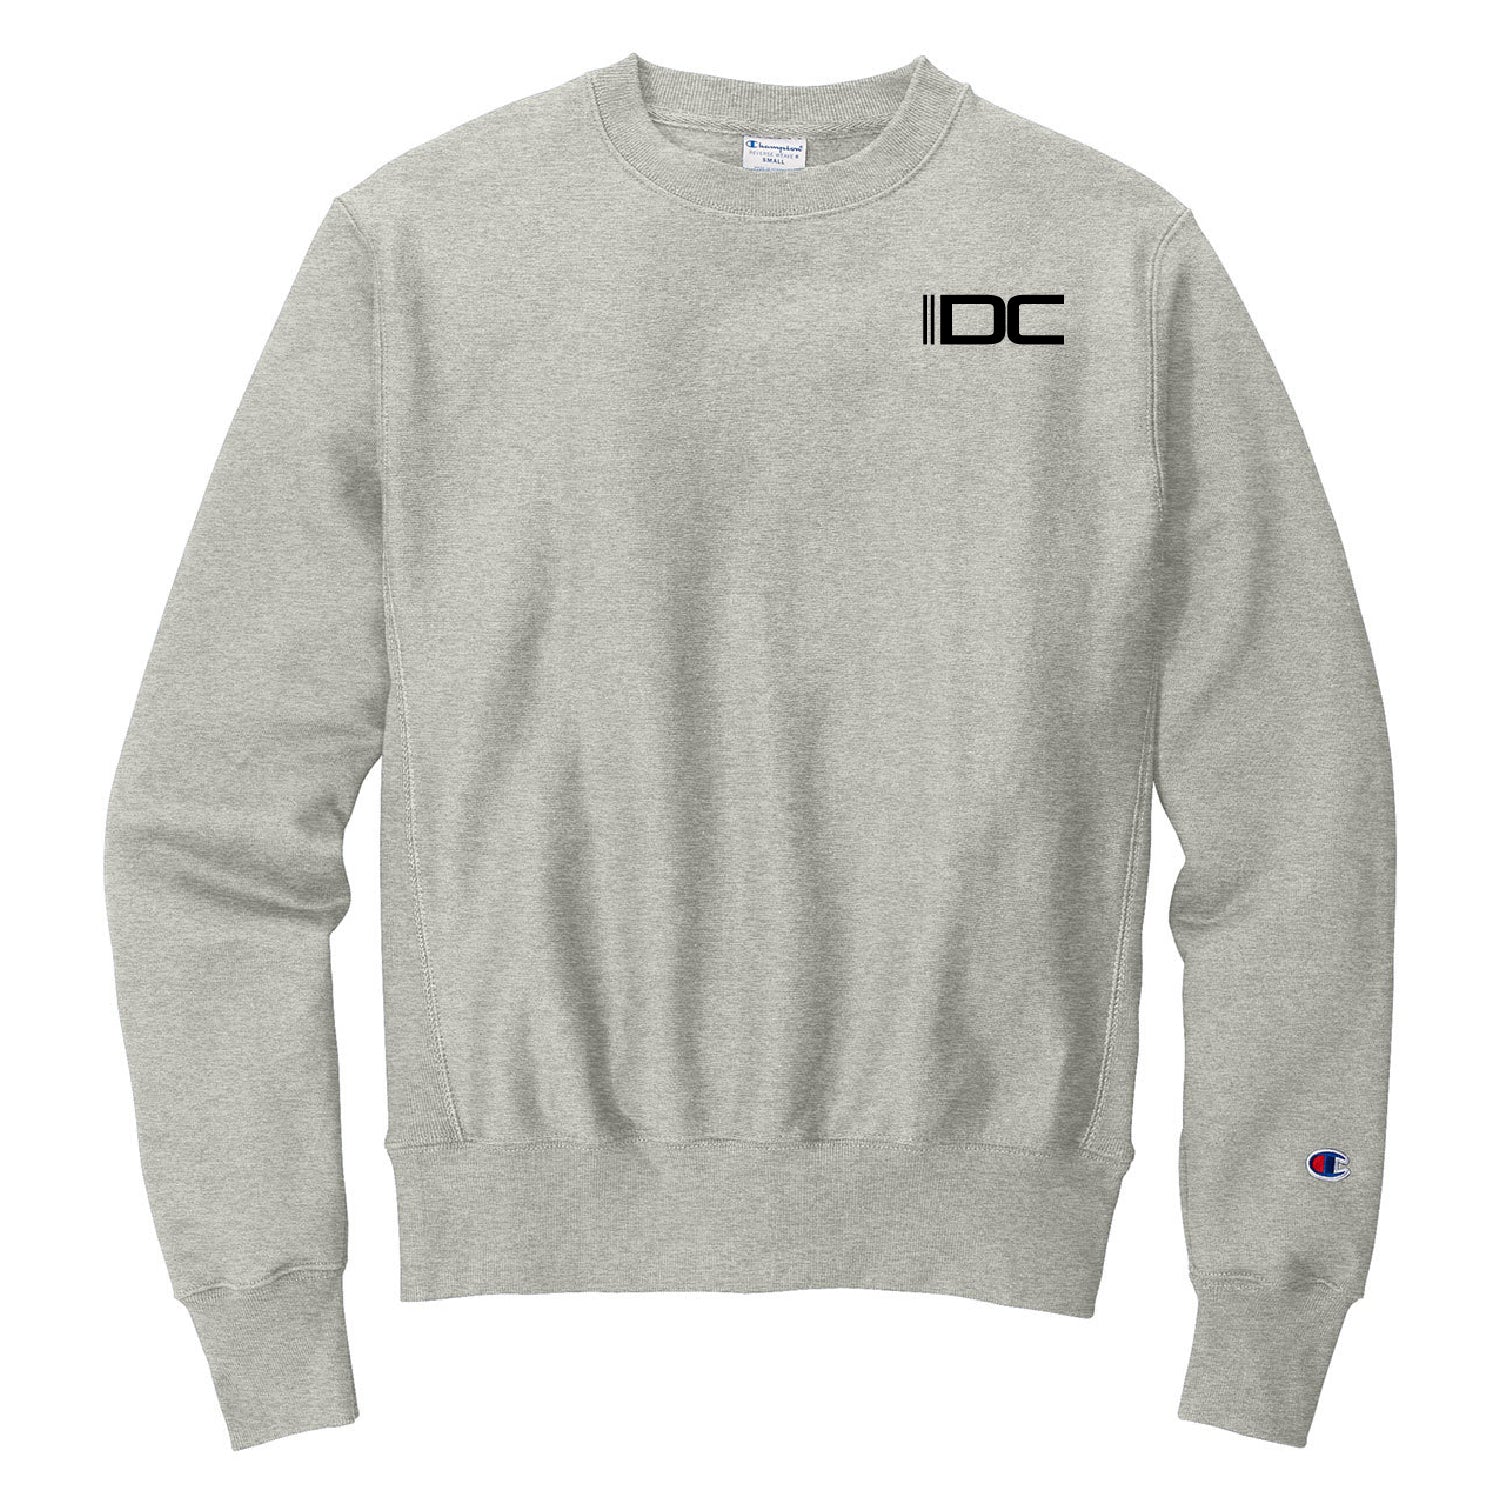 IDC Champion Reverse Weave Crewneck Sweatshirt - DSP On Demand